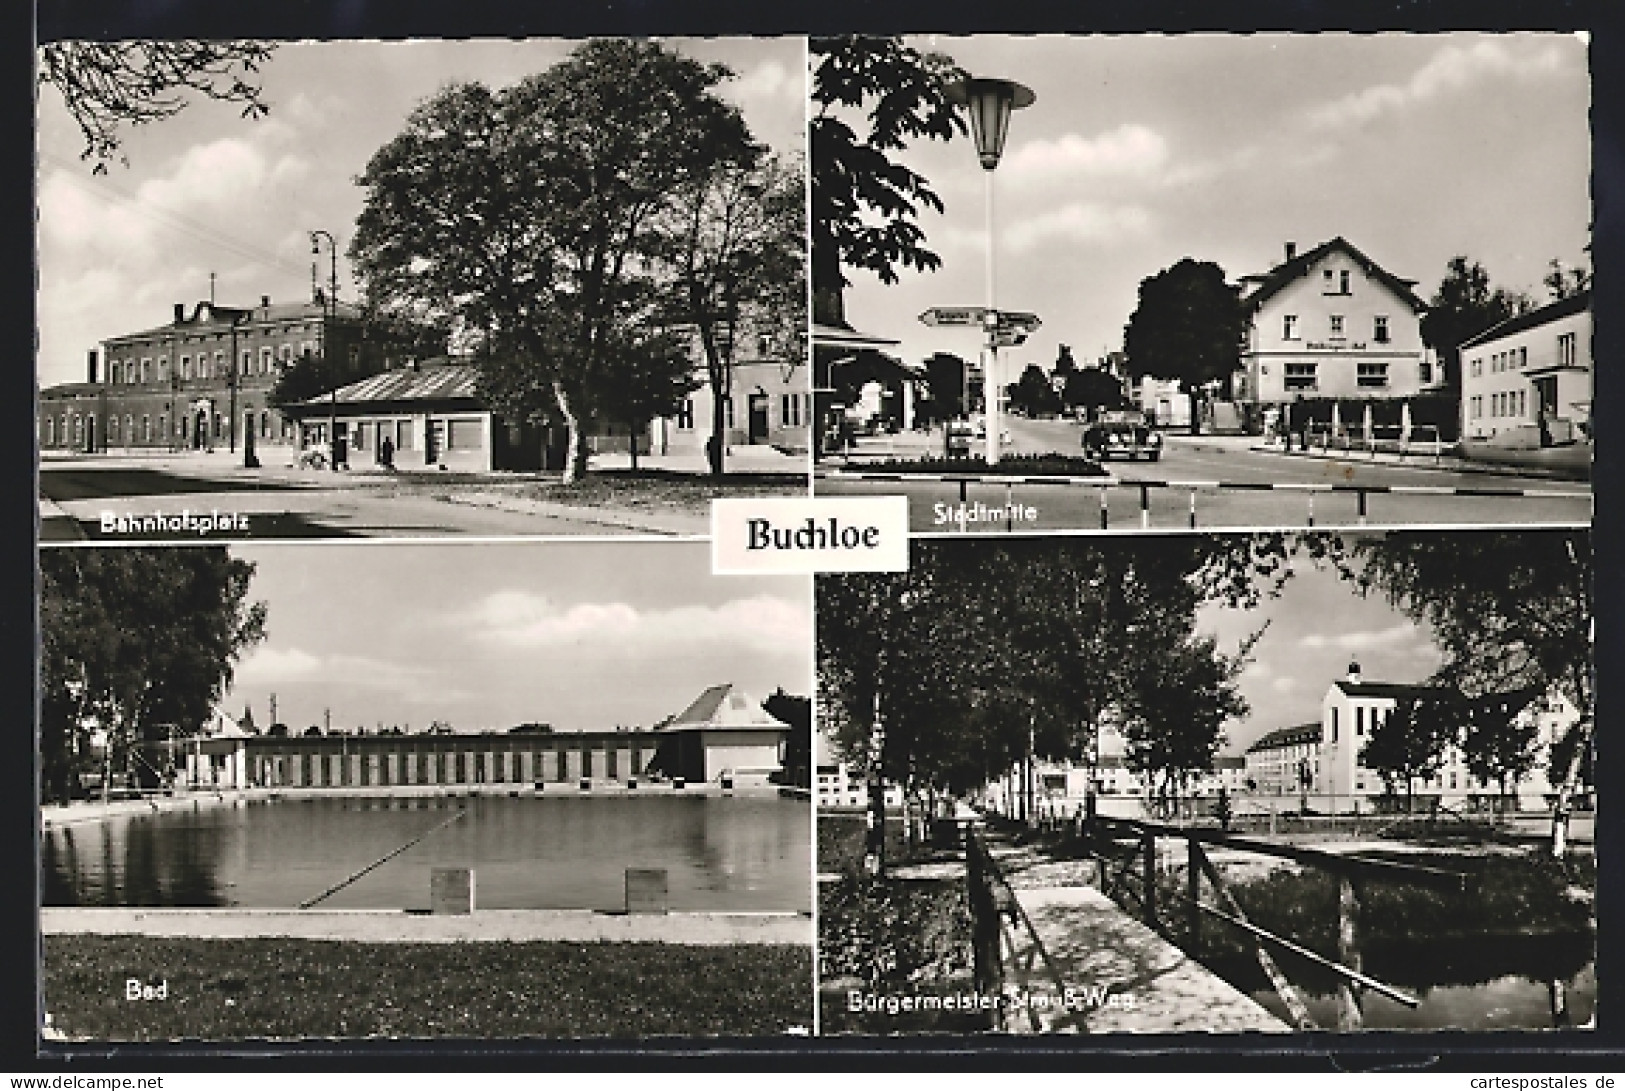 AK Buchloe, Bahnhofsplatz, Bad, Bürgermeister-Strauss-Weg  - Buchloe